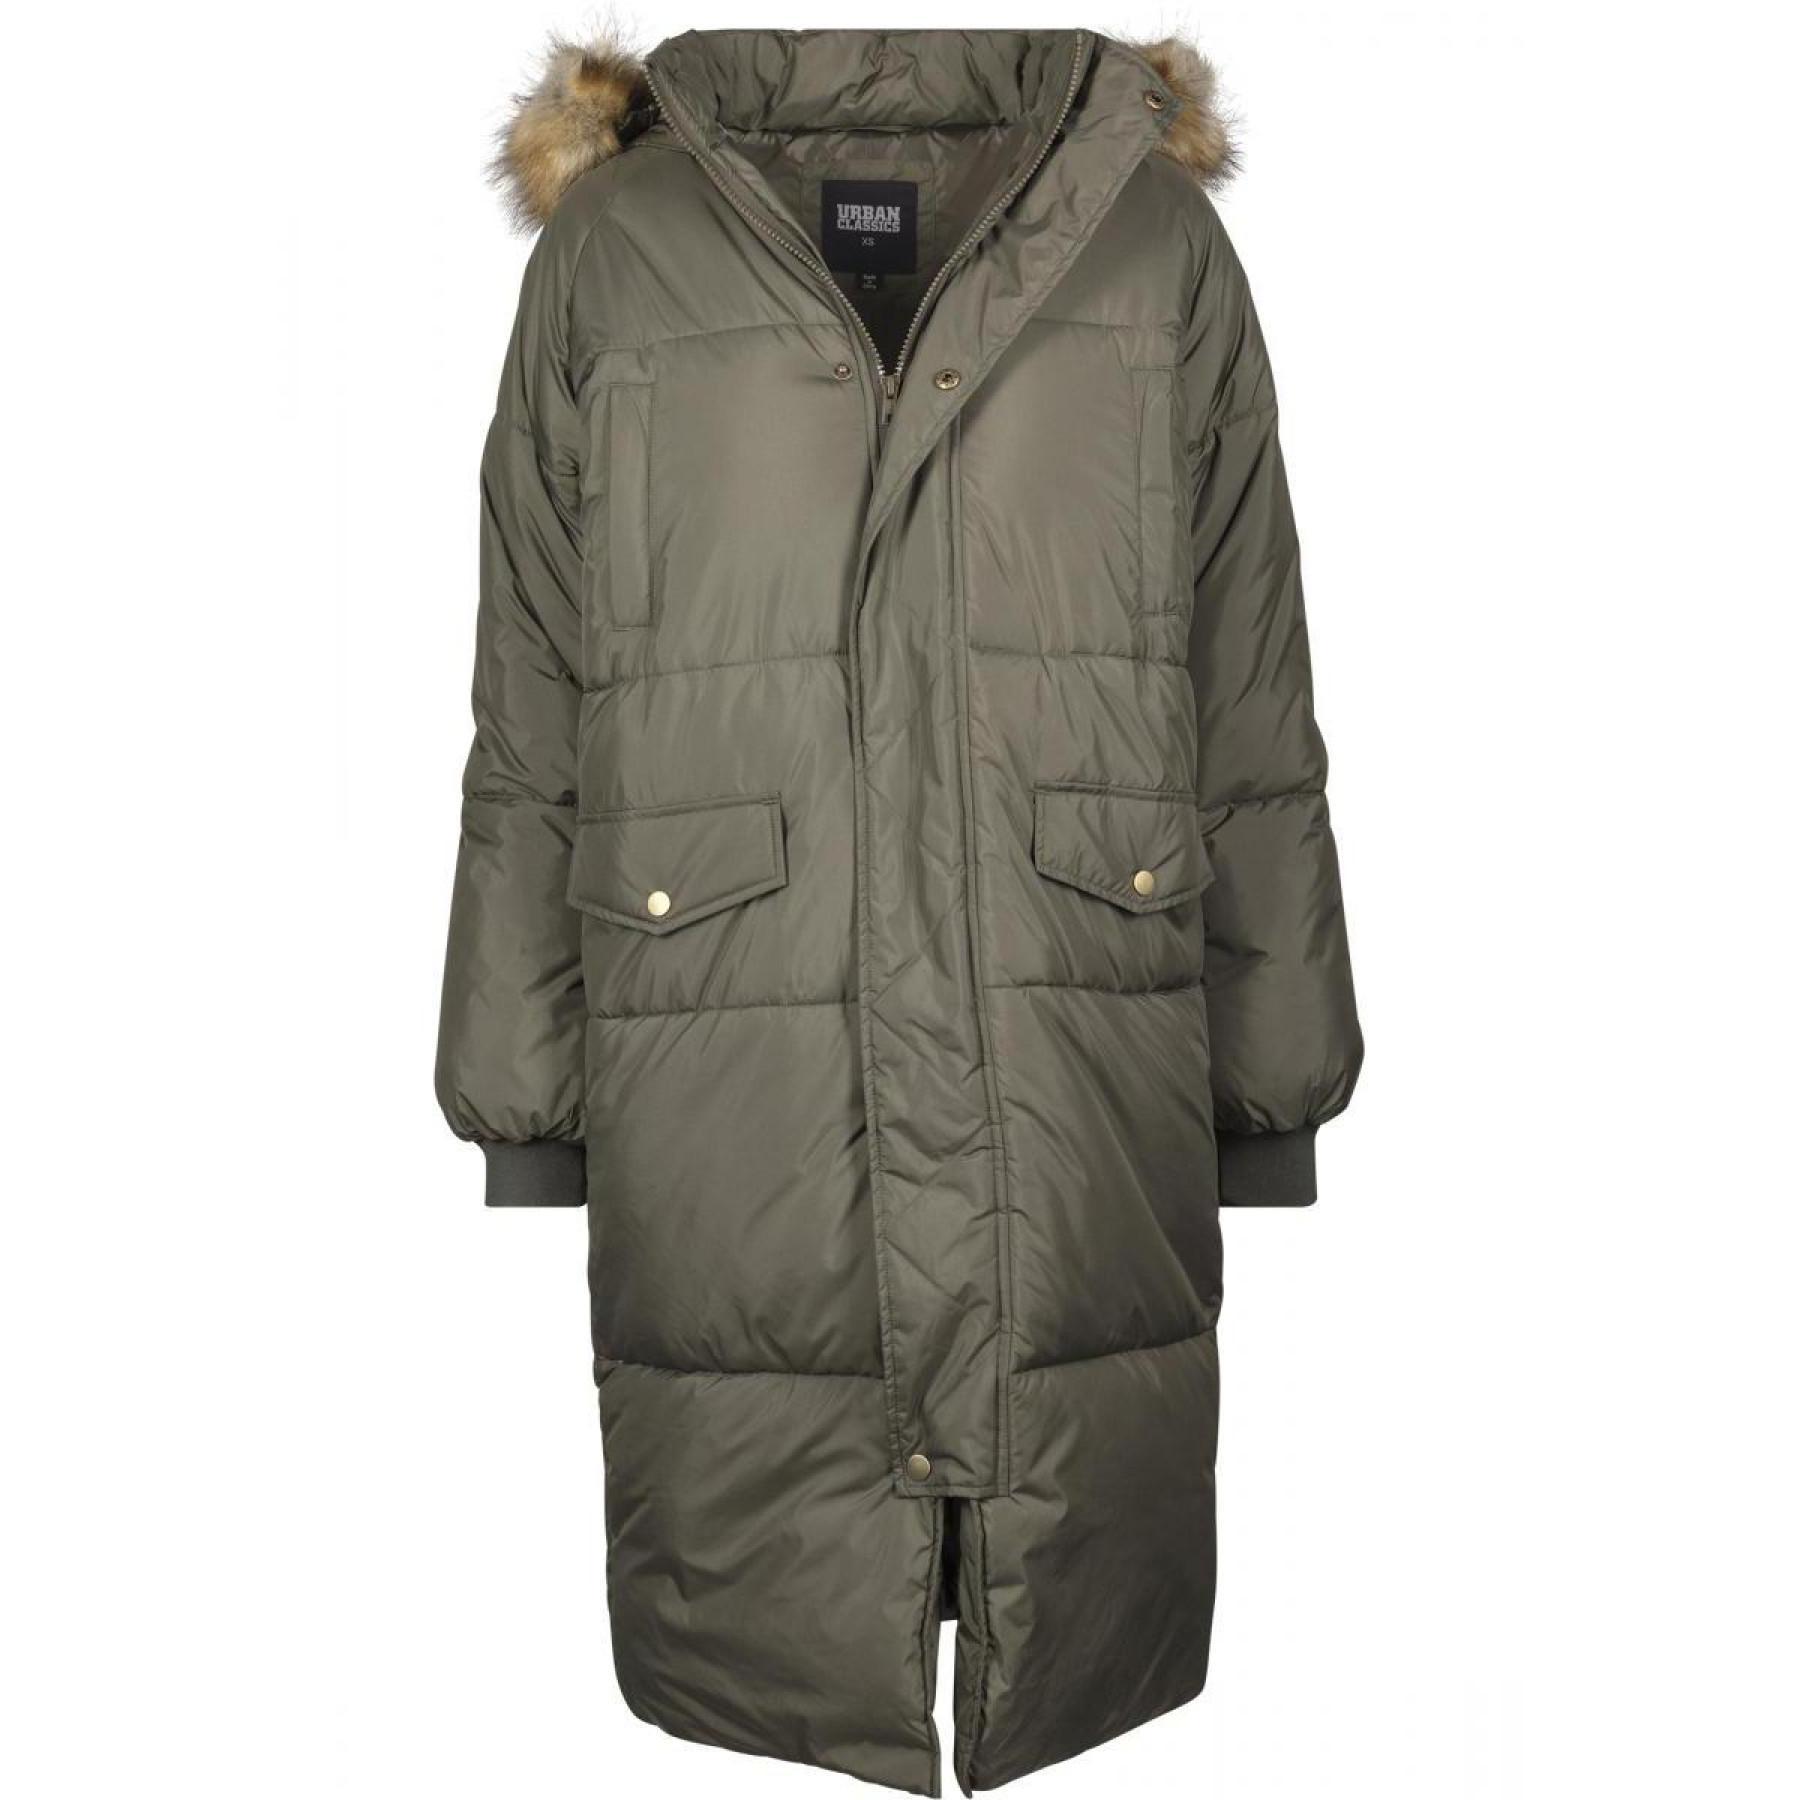 - Lifestyle Urban Oversize and - - Jackets Women\'s Coats Classic coat Woman parka